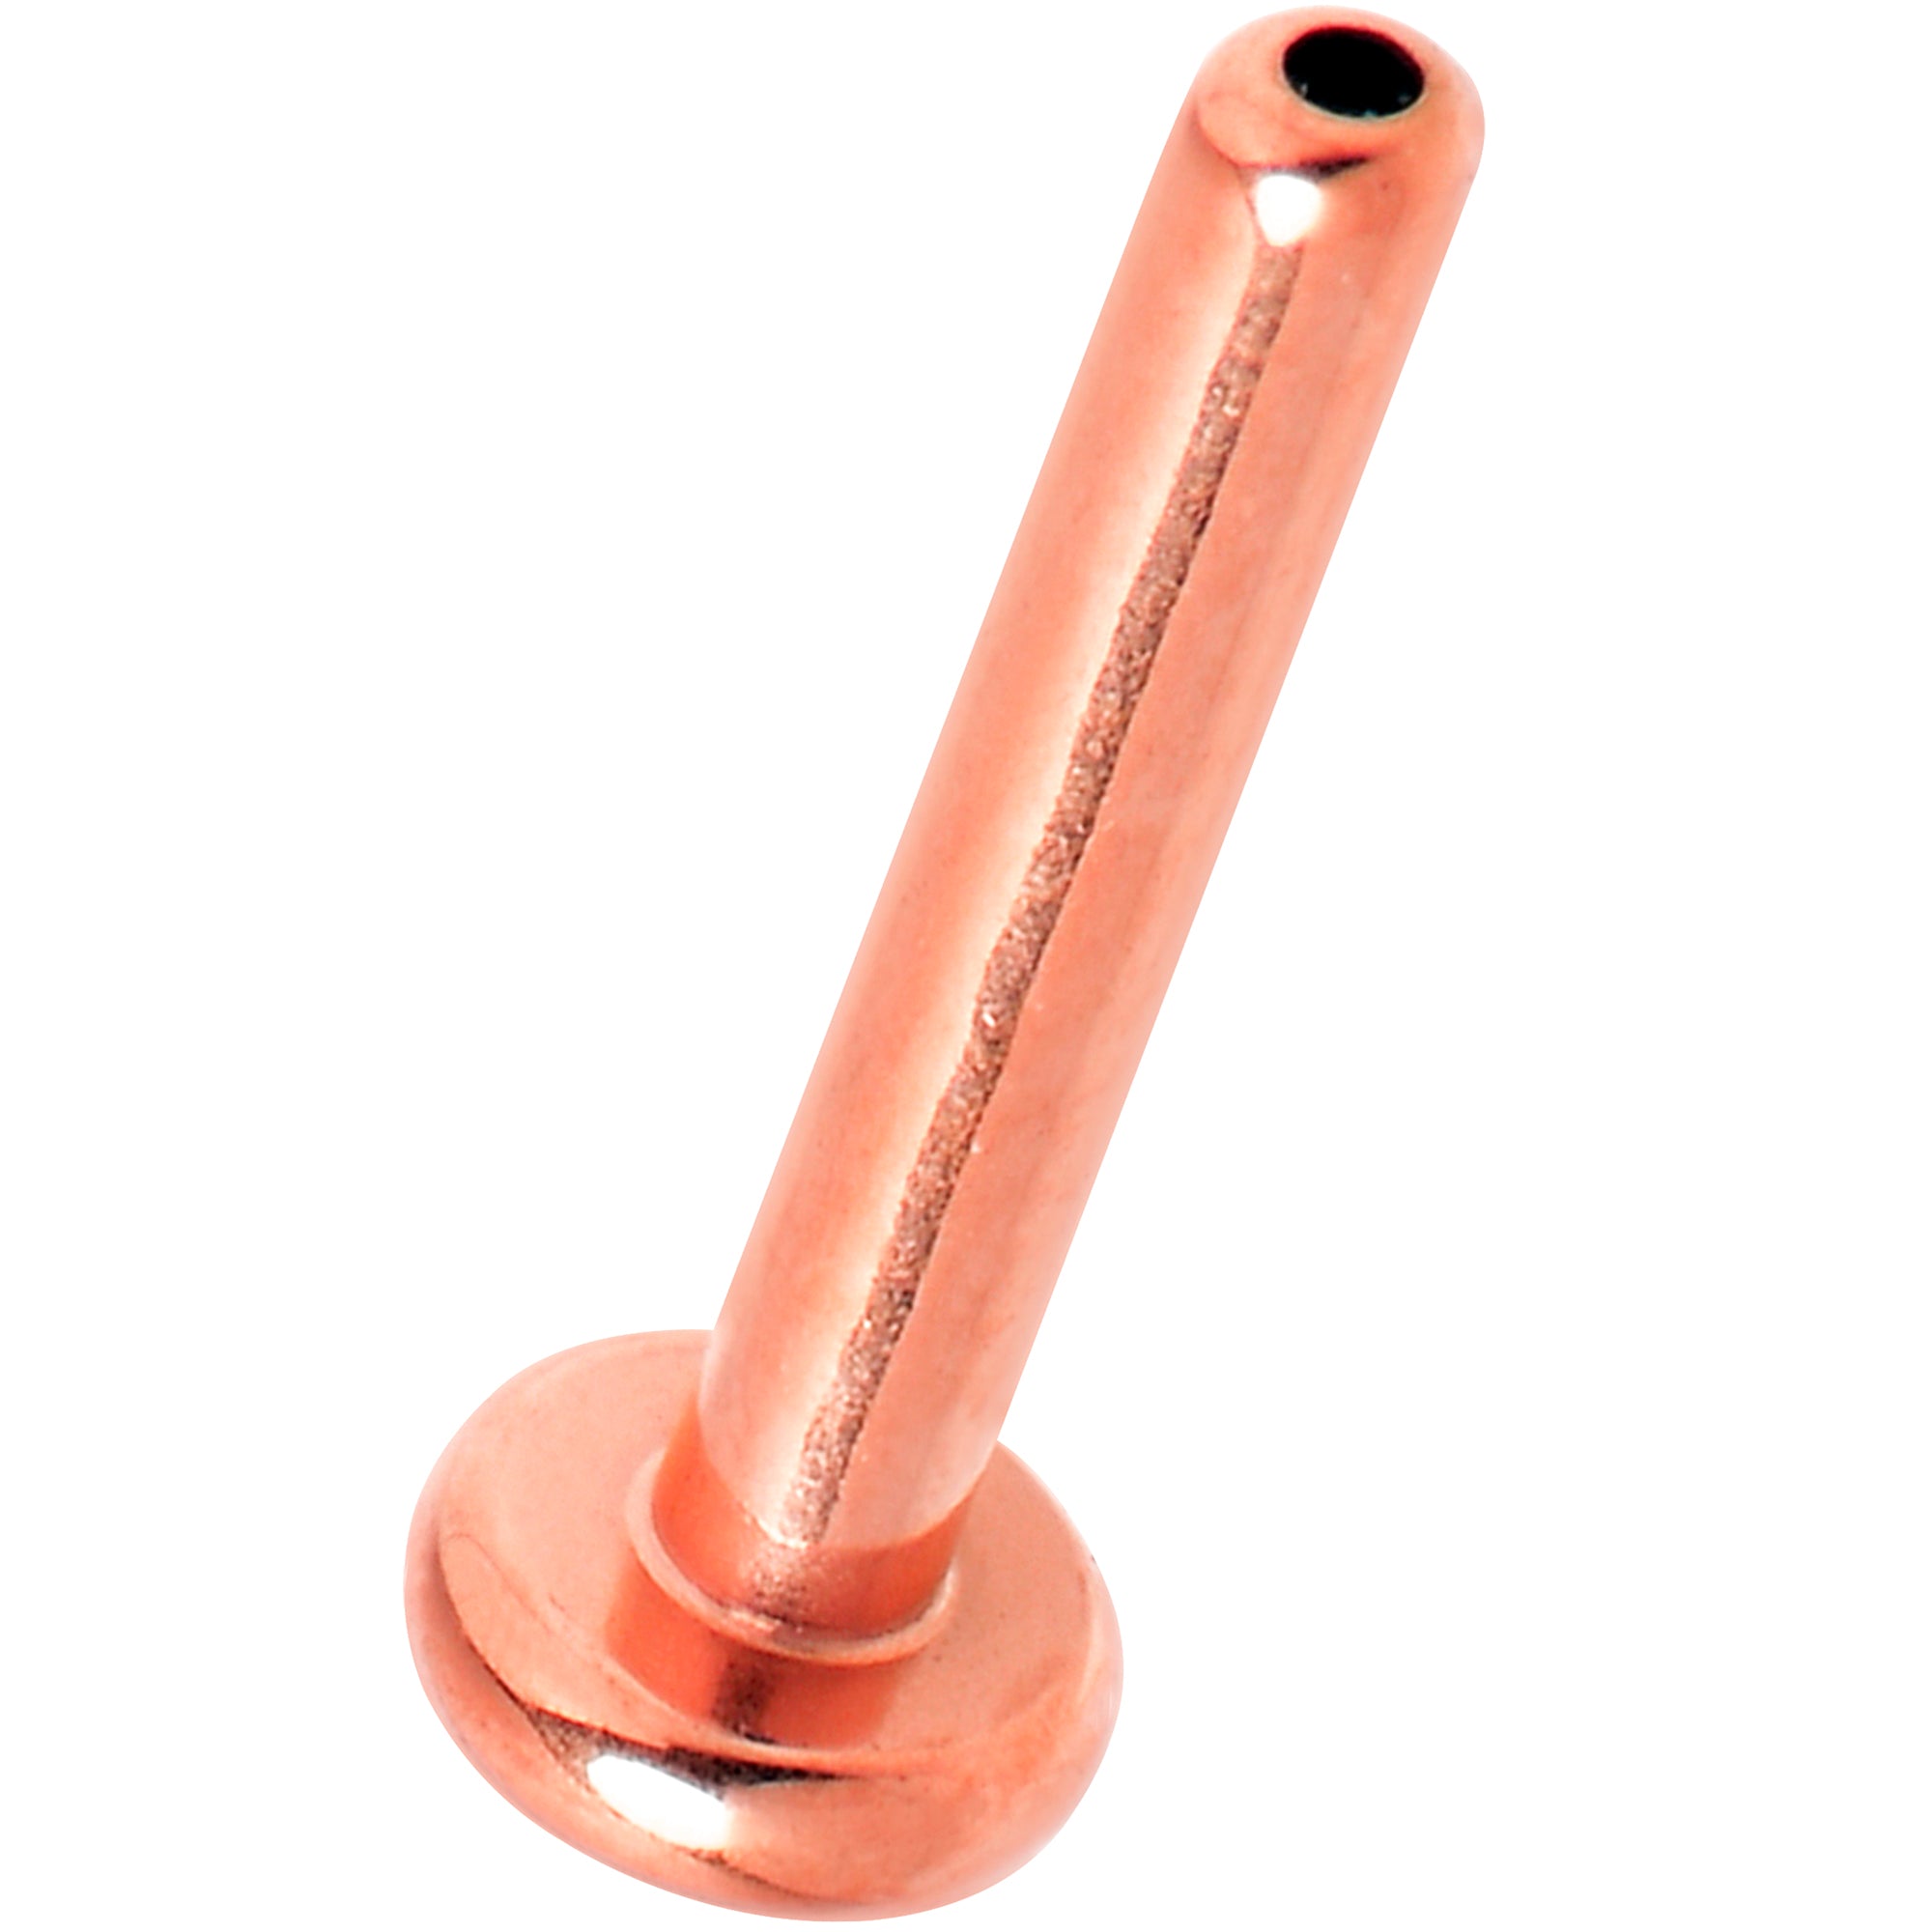 16 Gauge 5/16 Rosy Hue ASTM F-136 Implant Grade Titanium Threadless Post Only Labret